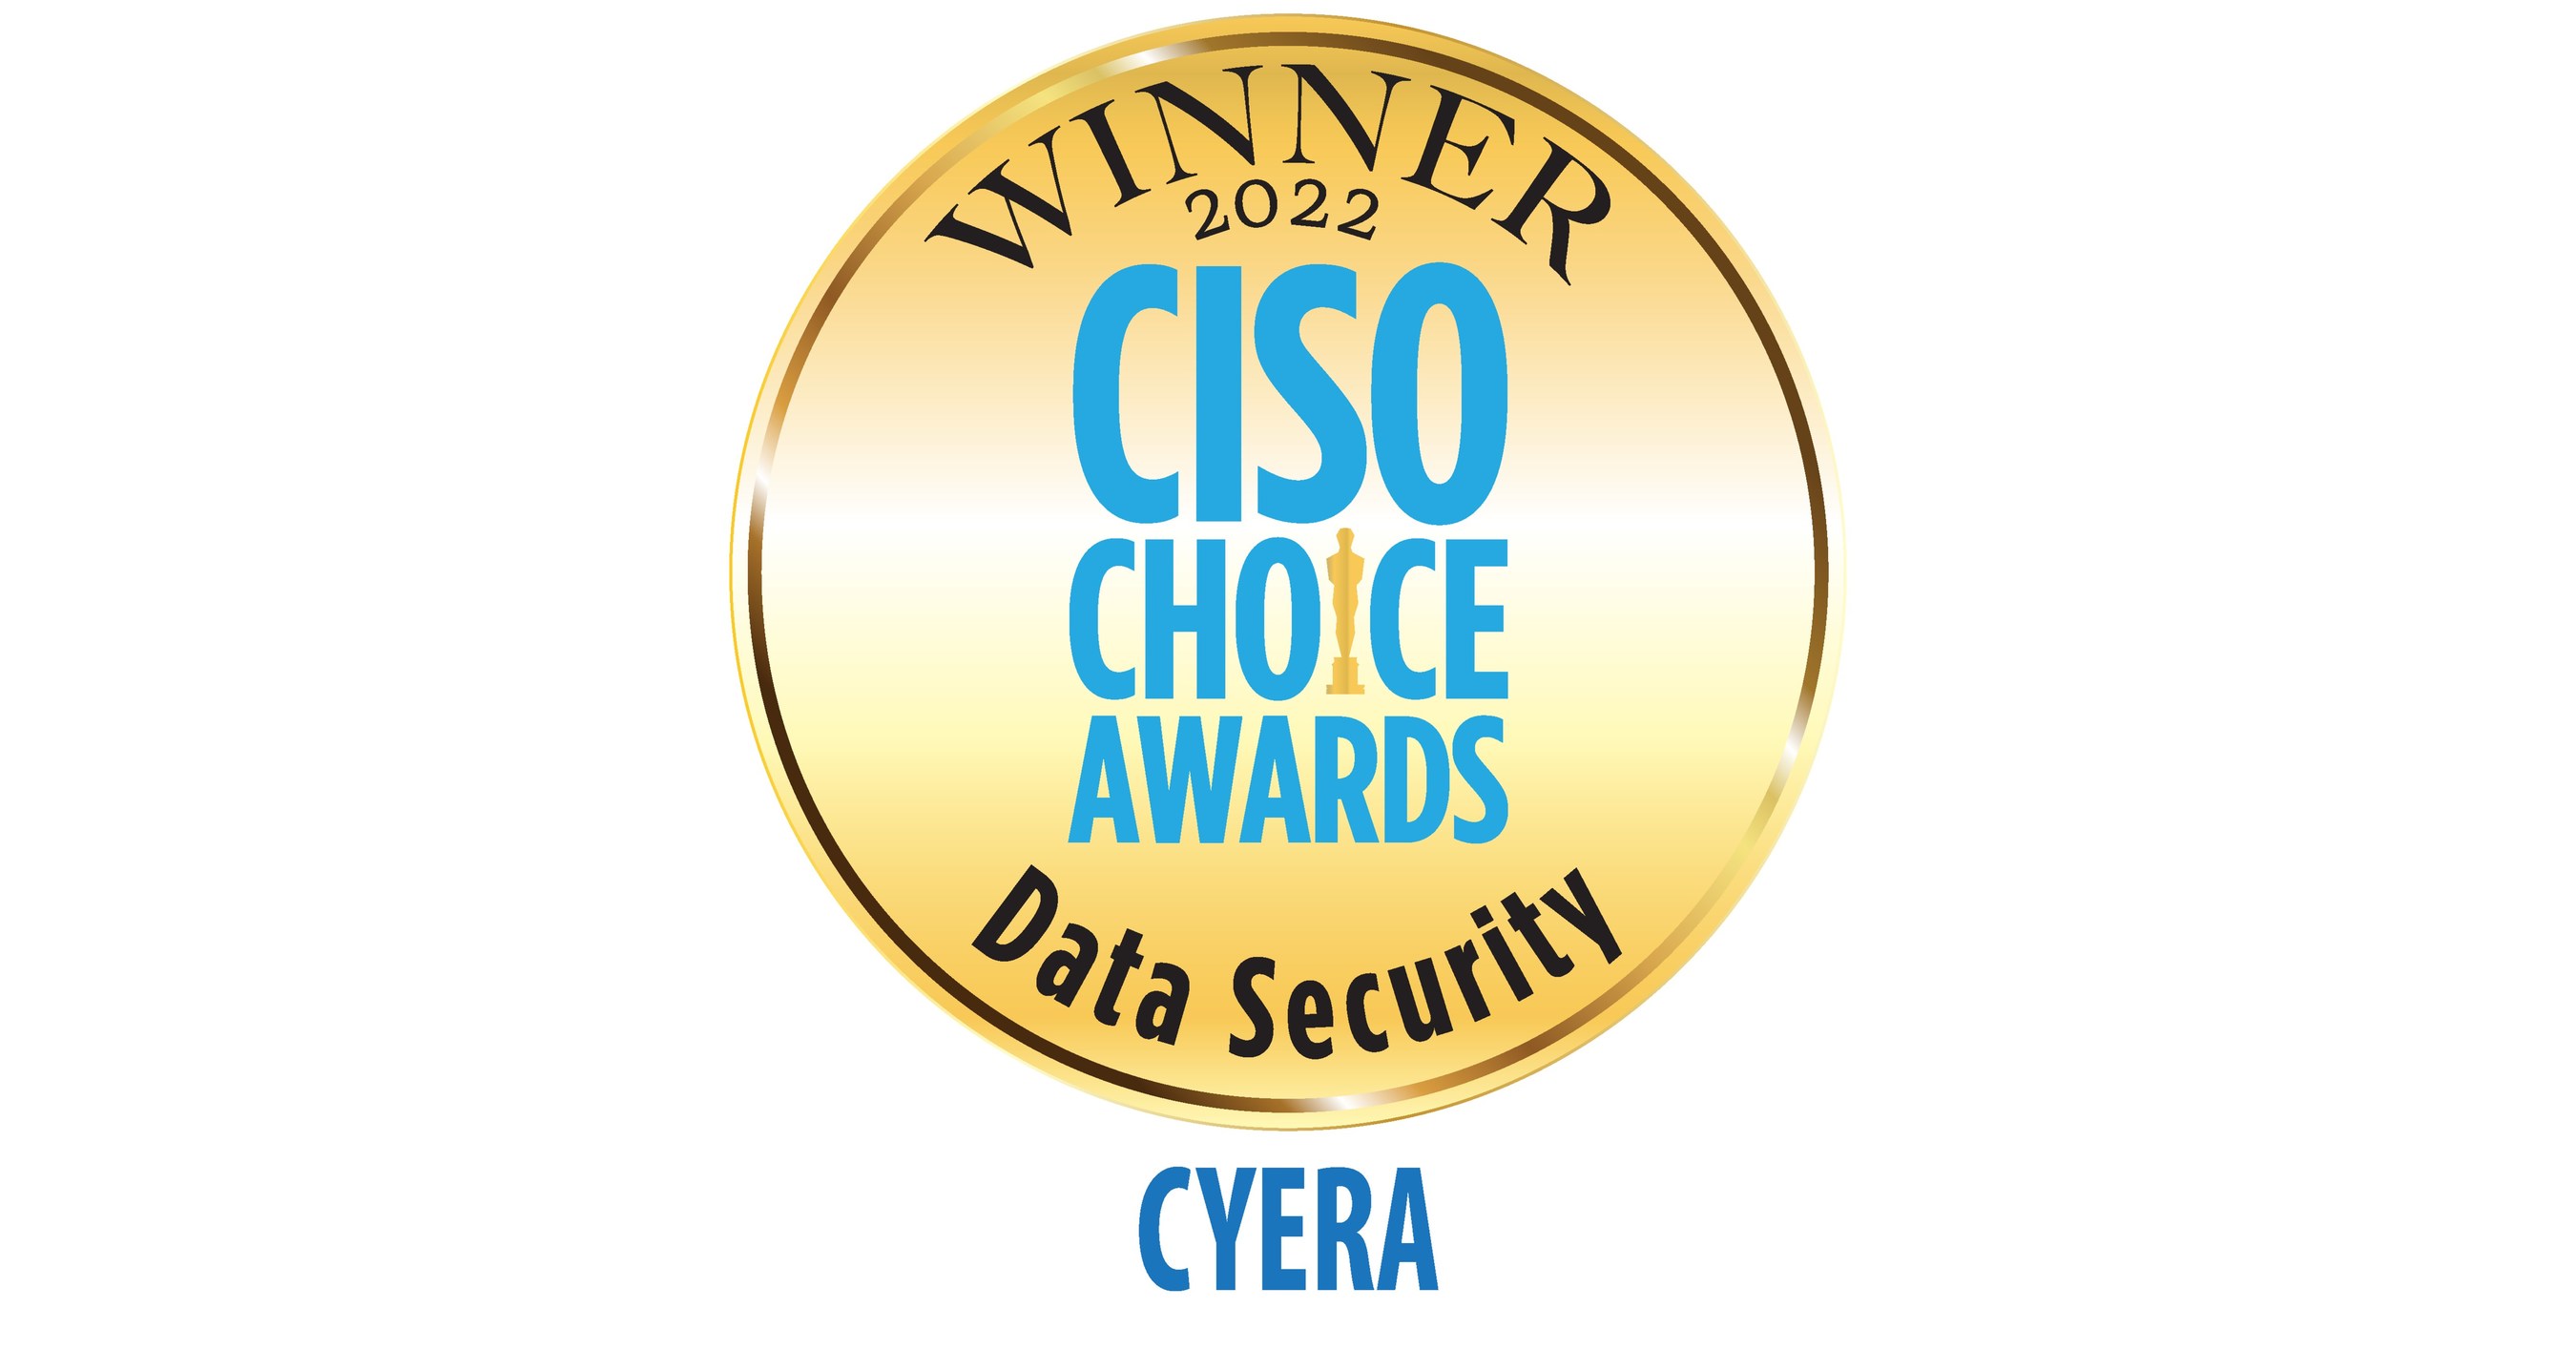 Cyera Named Best Data Security Solution at 2022 CISO Choice Awards USA